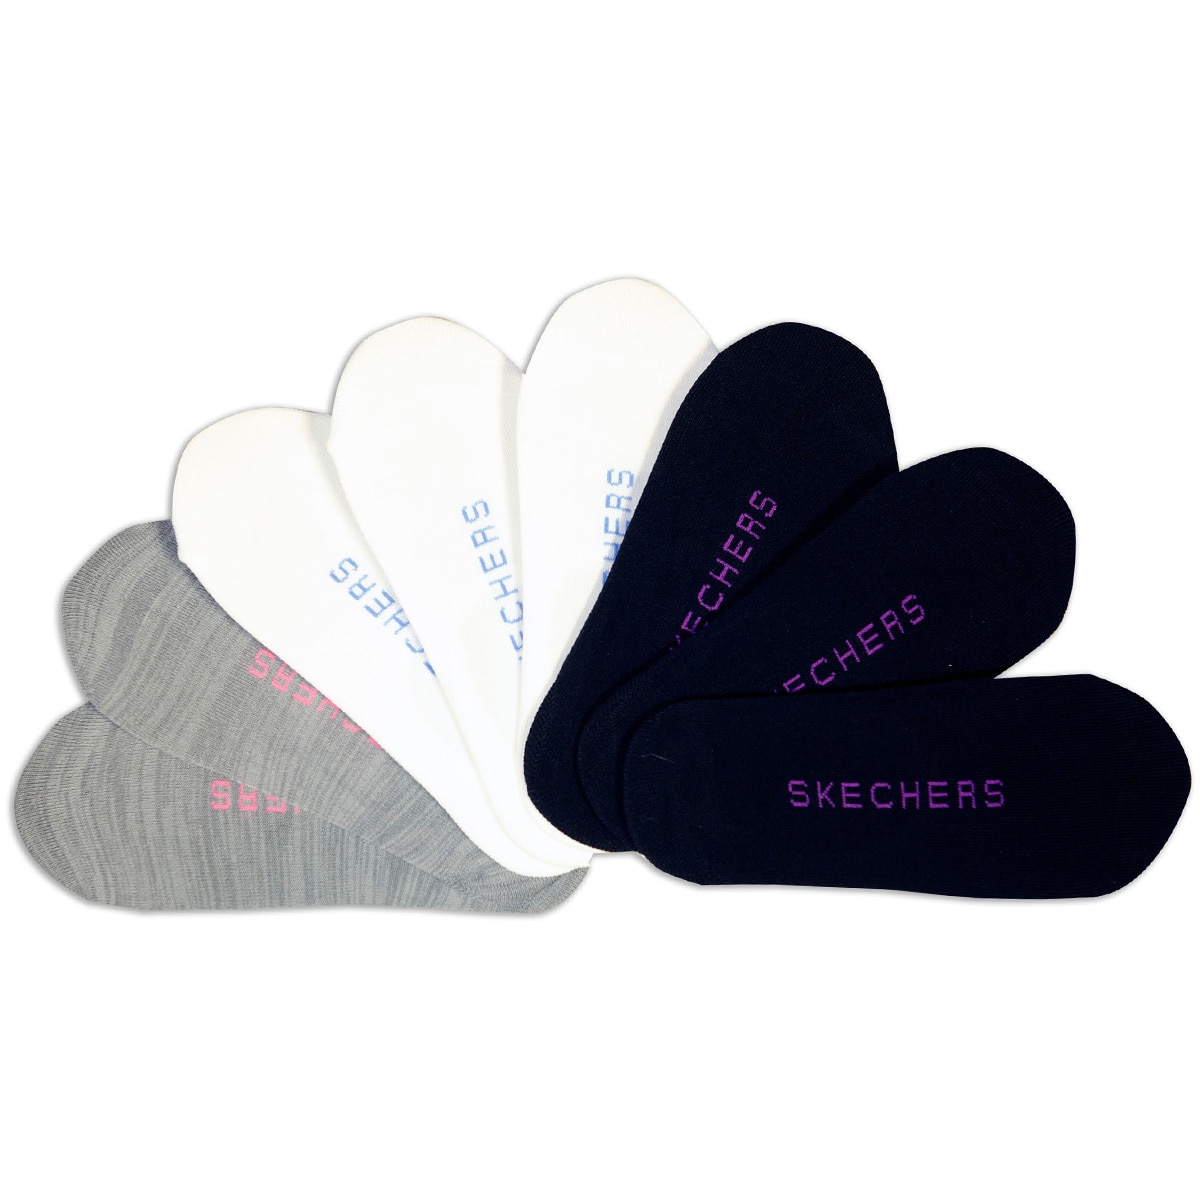 socks with skechers